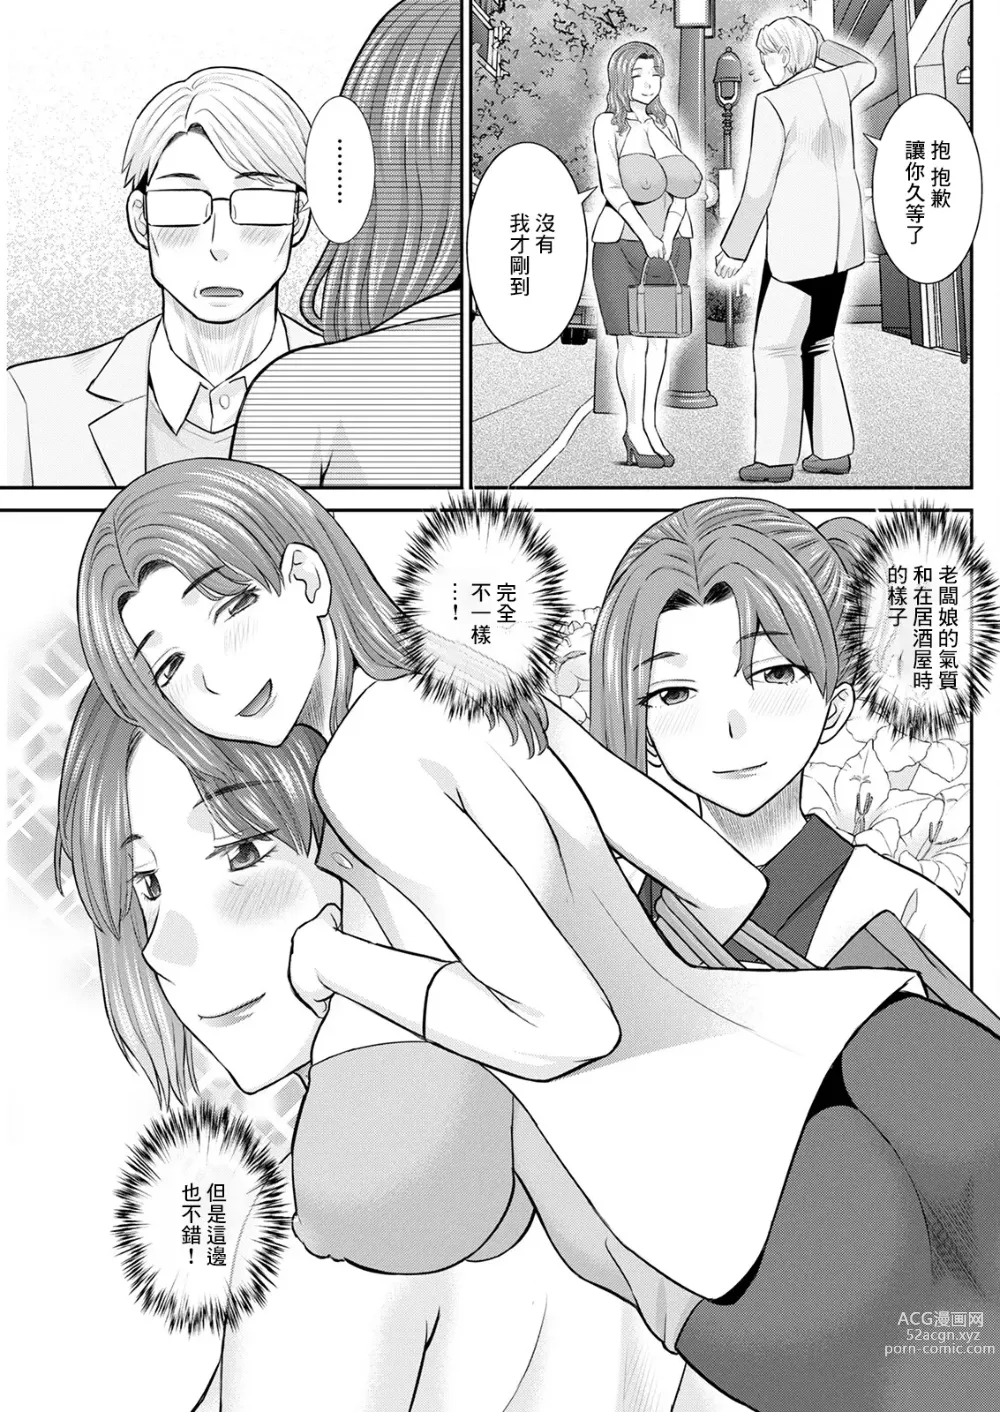 Page 3 of manga Izakaya no Megami Kouhen